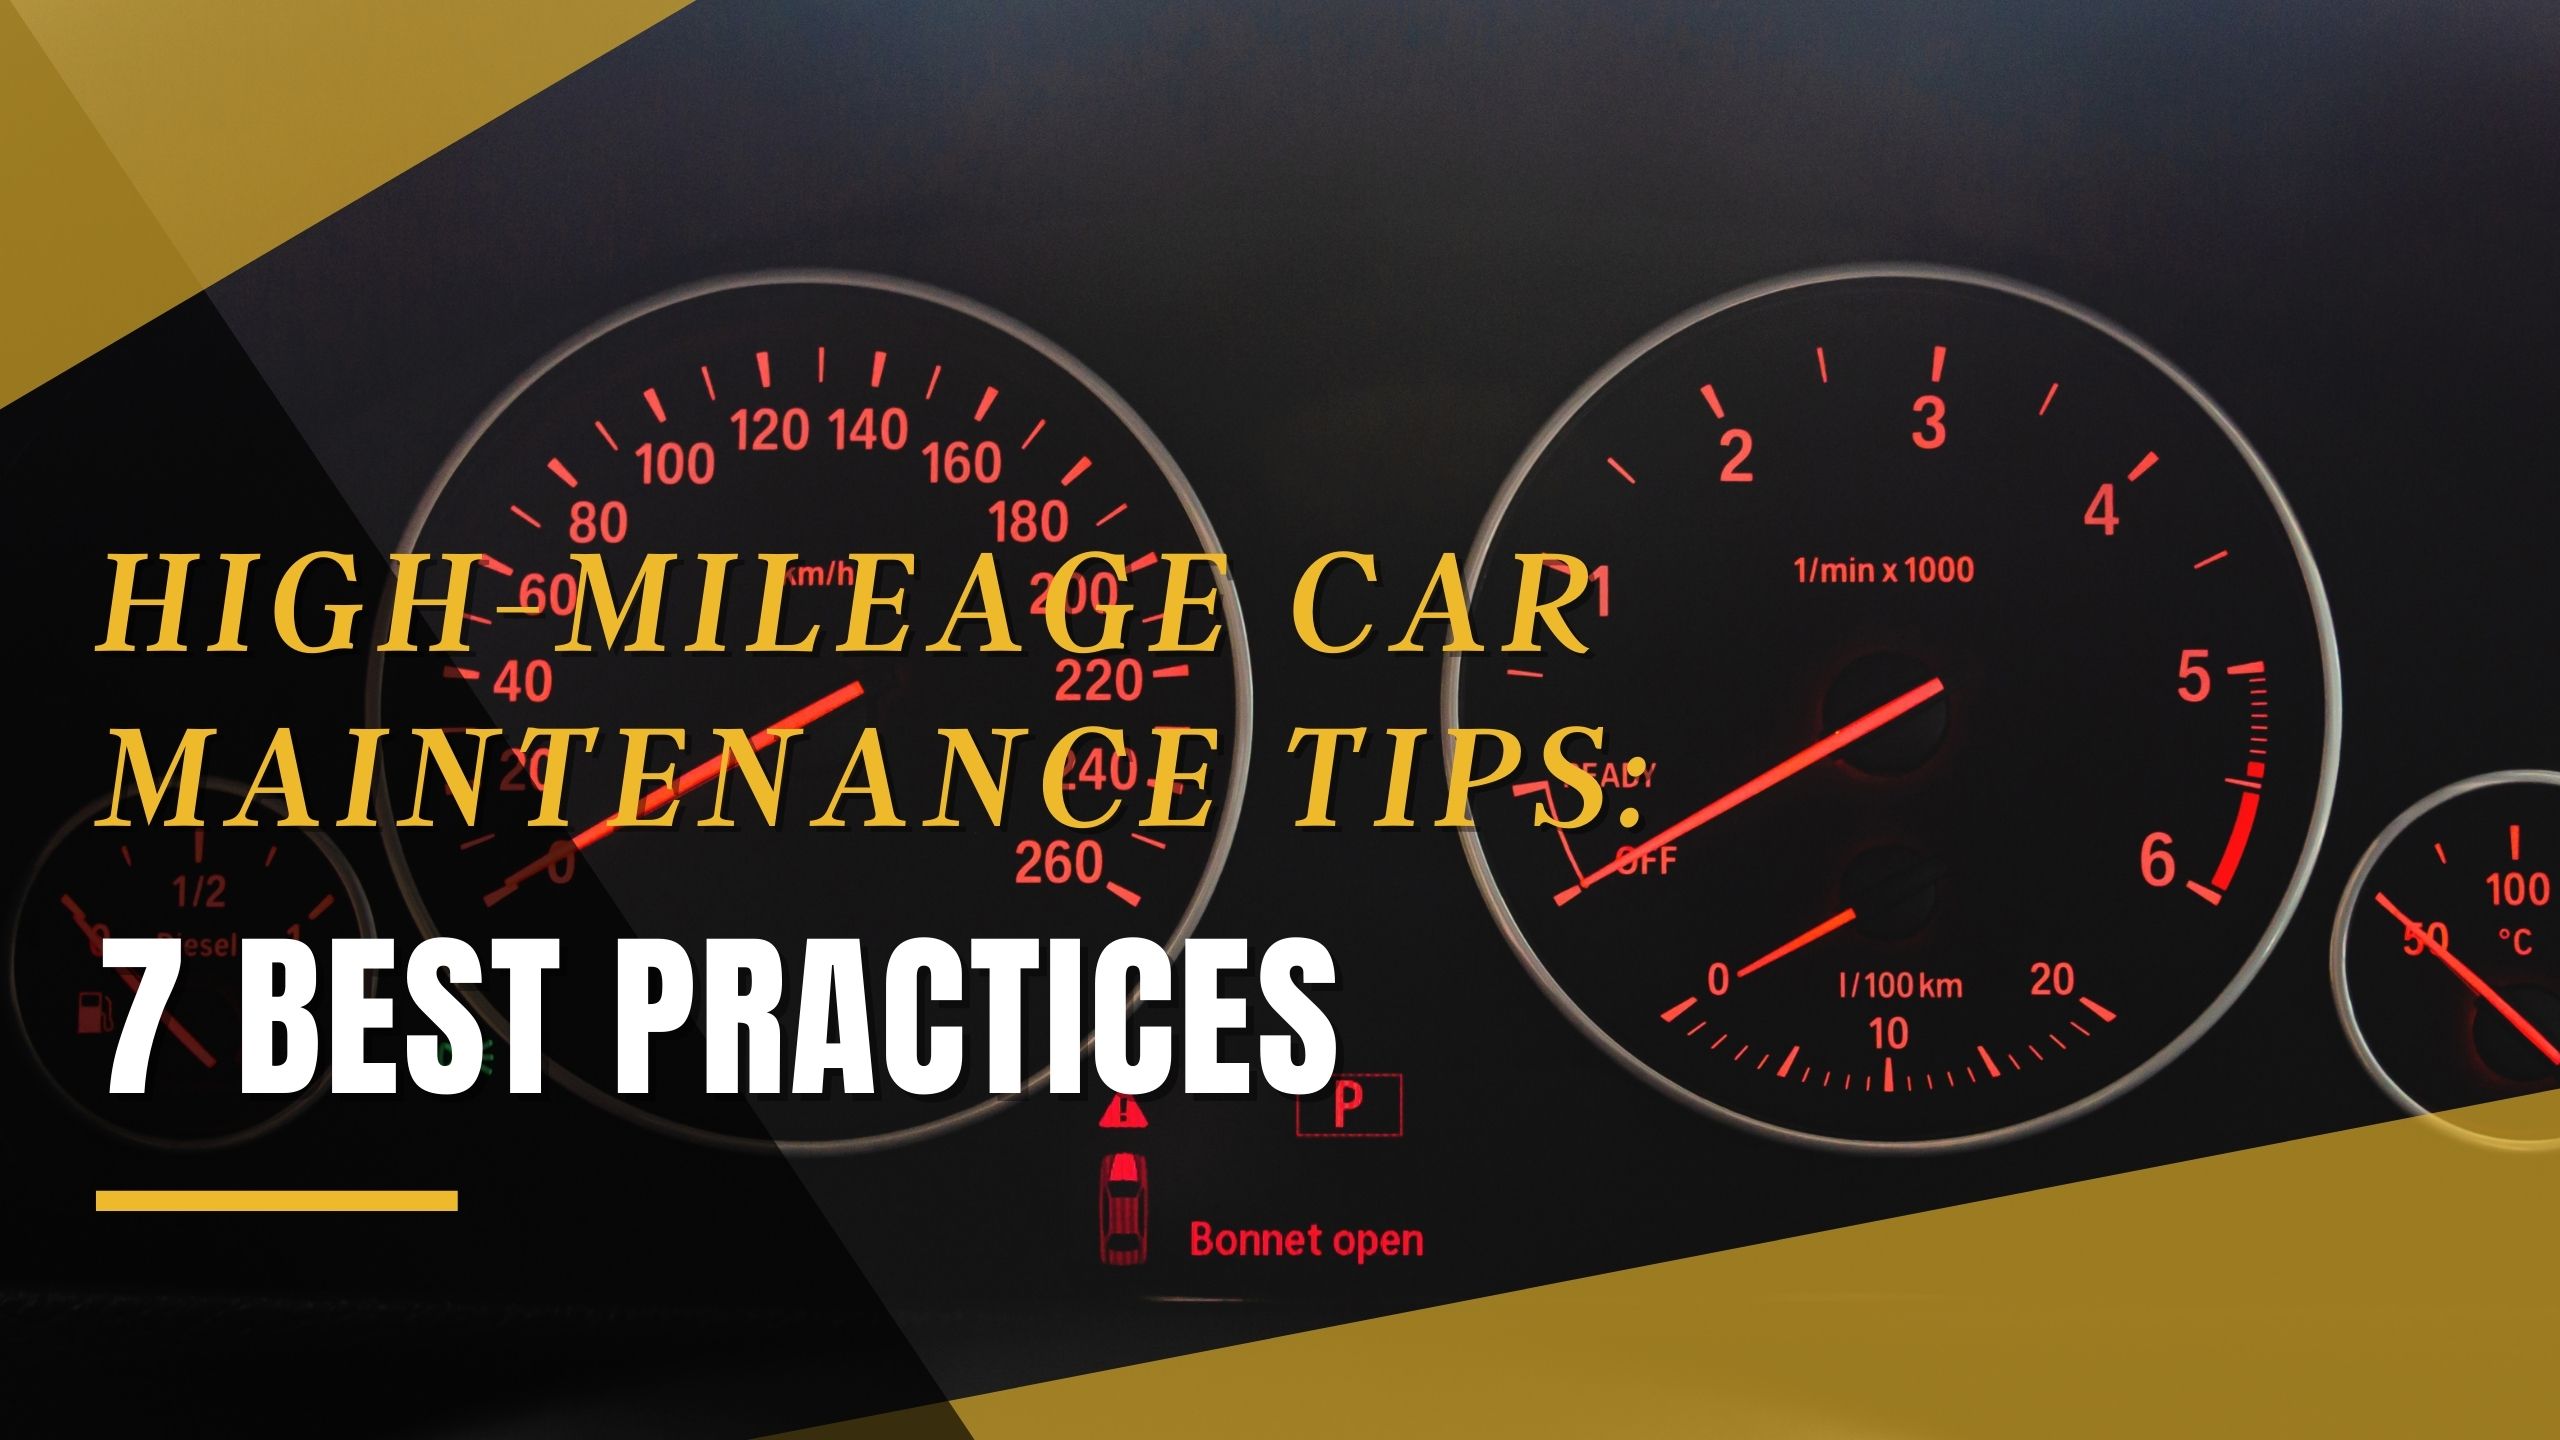 High-mileage car maintenance tips: 7 best practices